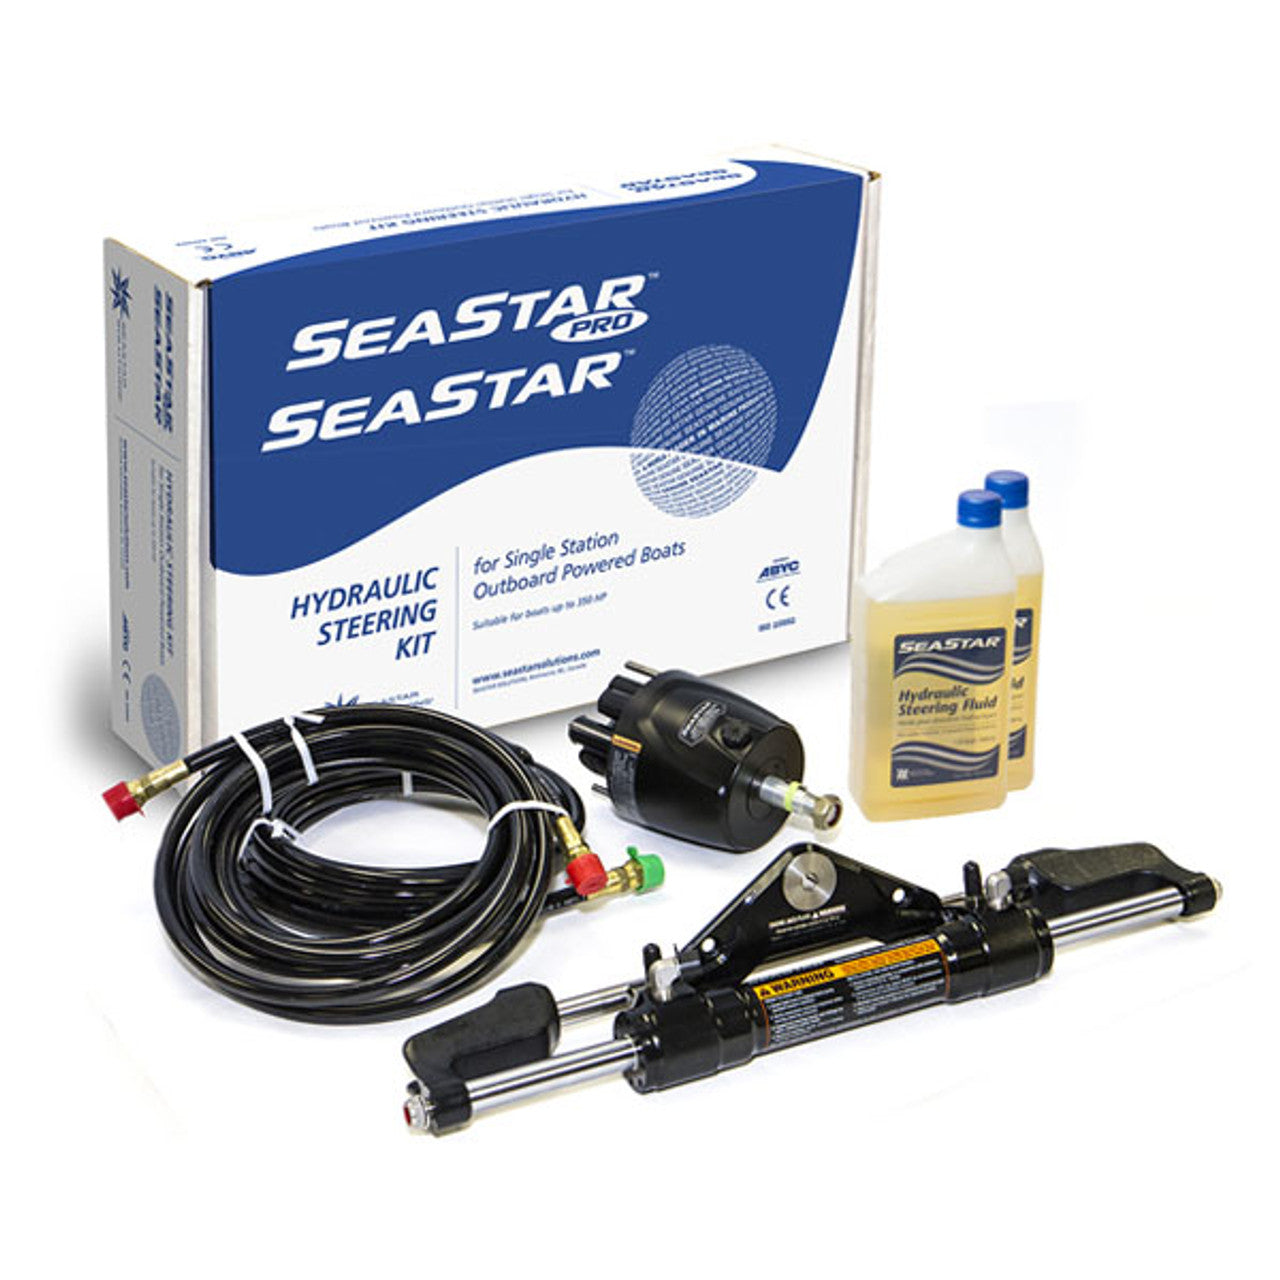 Seastar Hydraulic Steering Kit